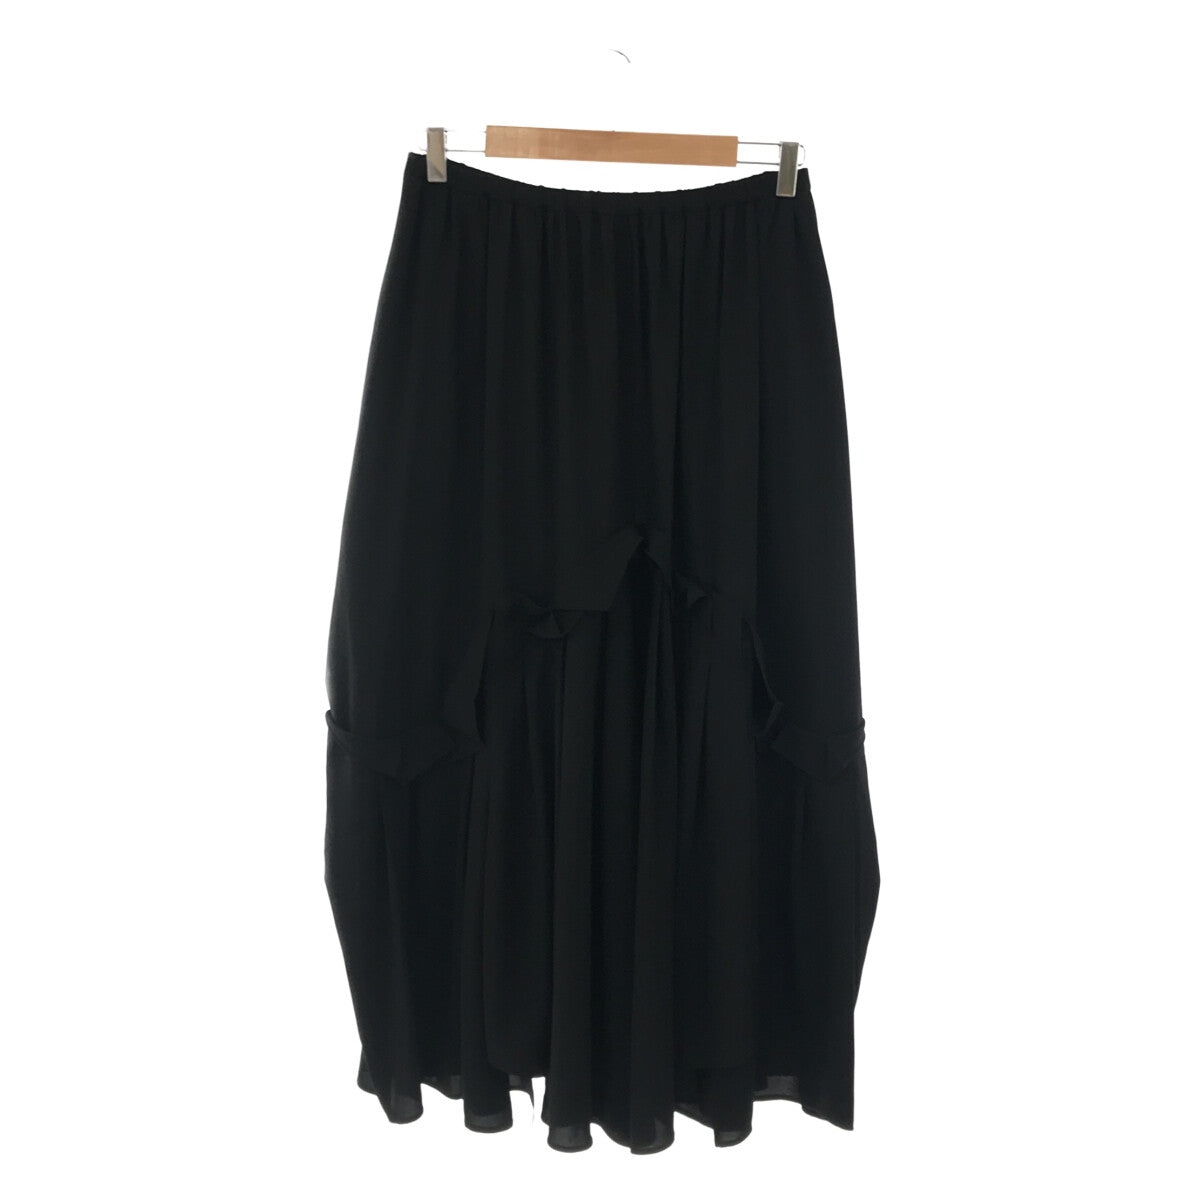 66cmヒップエンフォルド 21SS 38 M Pleated Skirt スカート 黒